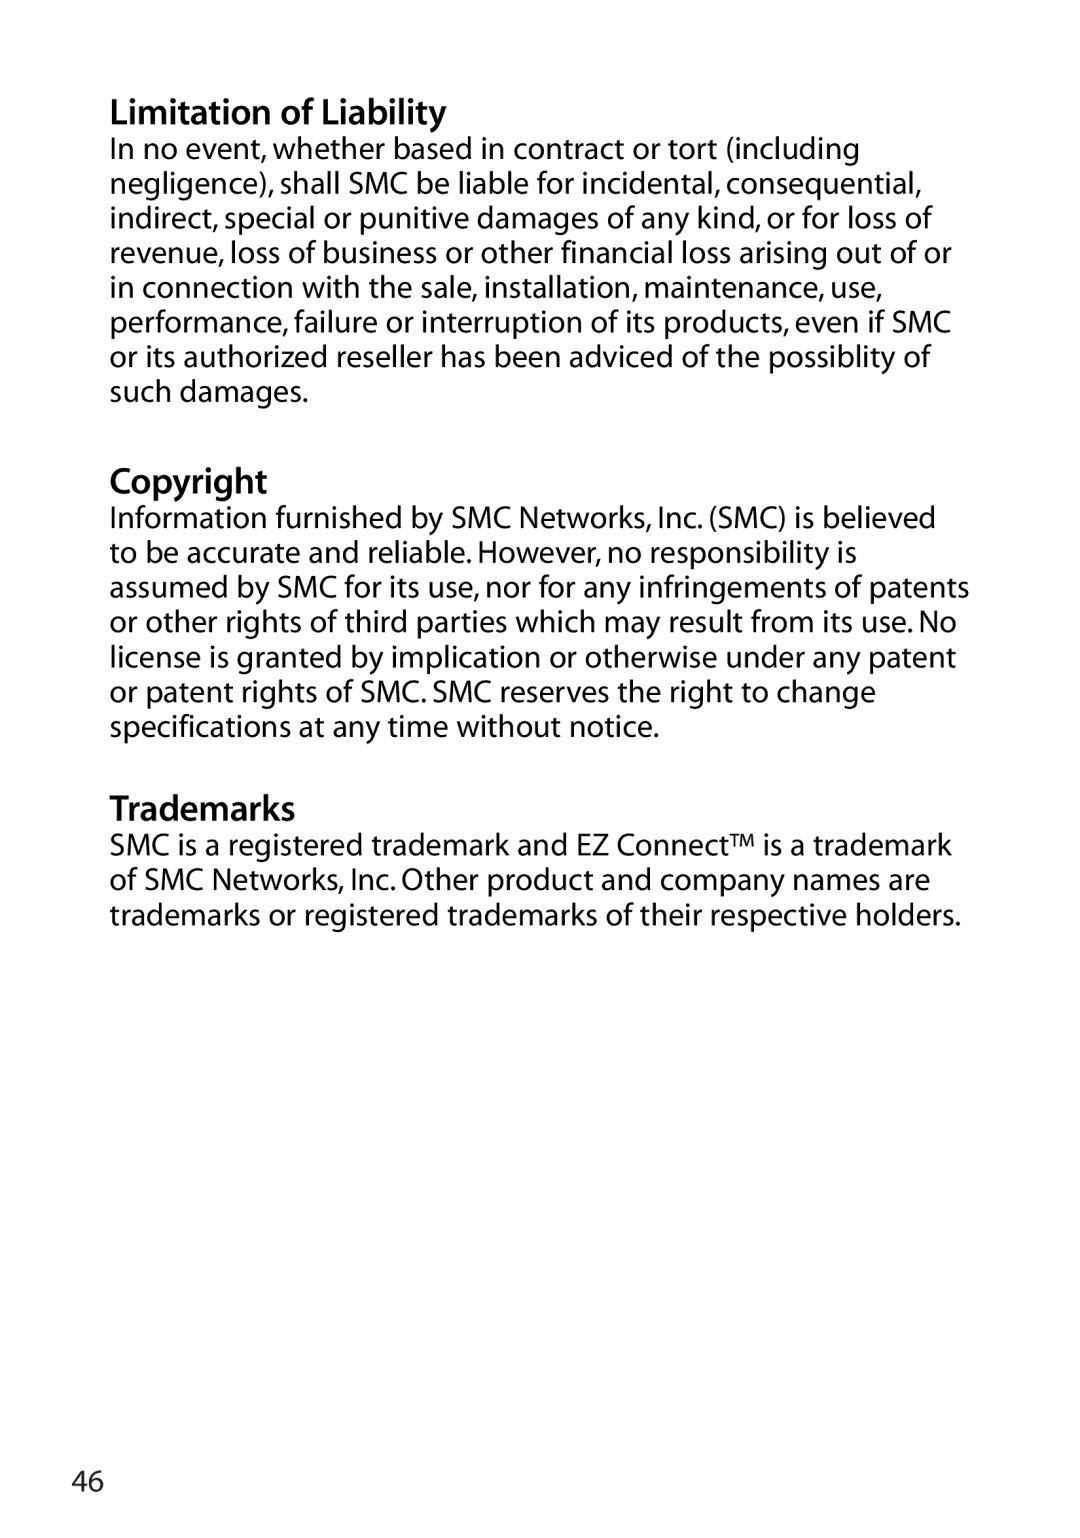 SMC Networks SMC2802W manual Limitation of Liability, Copyright, Trademarks 